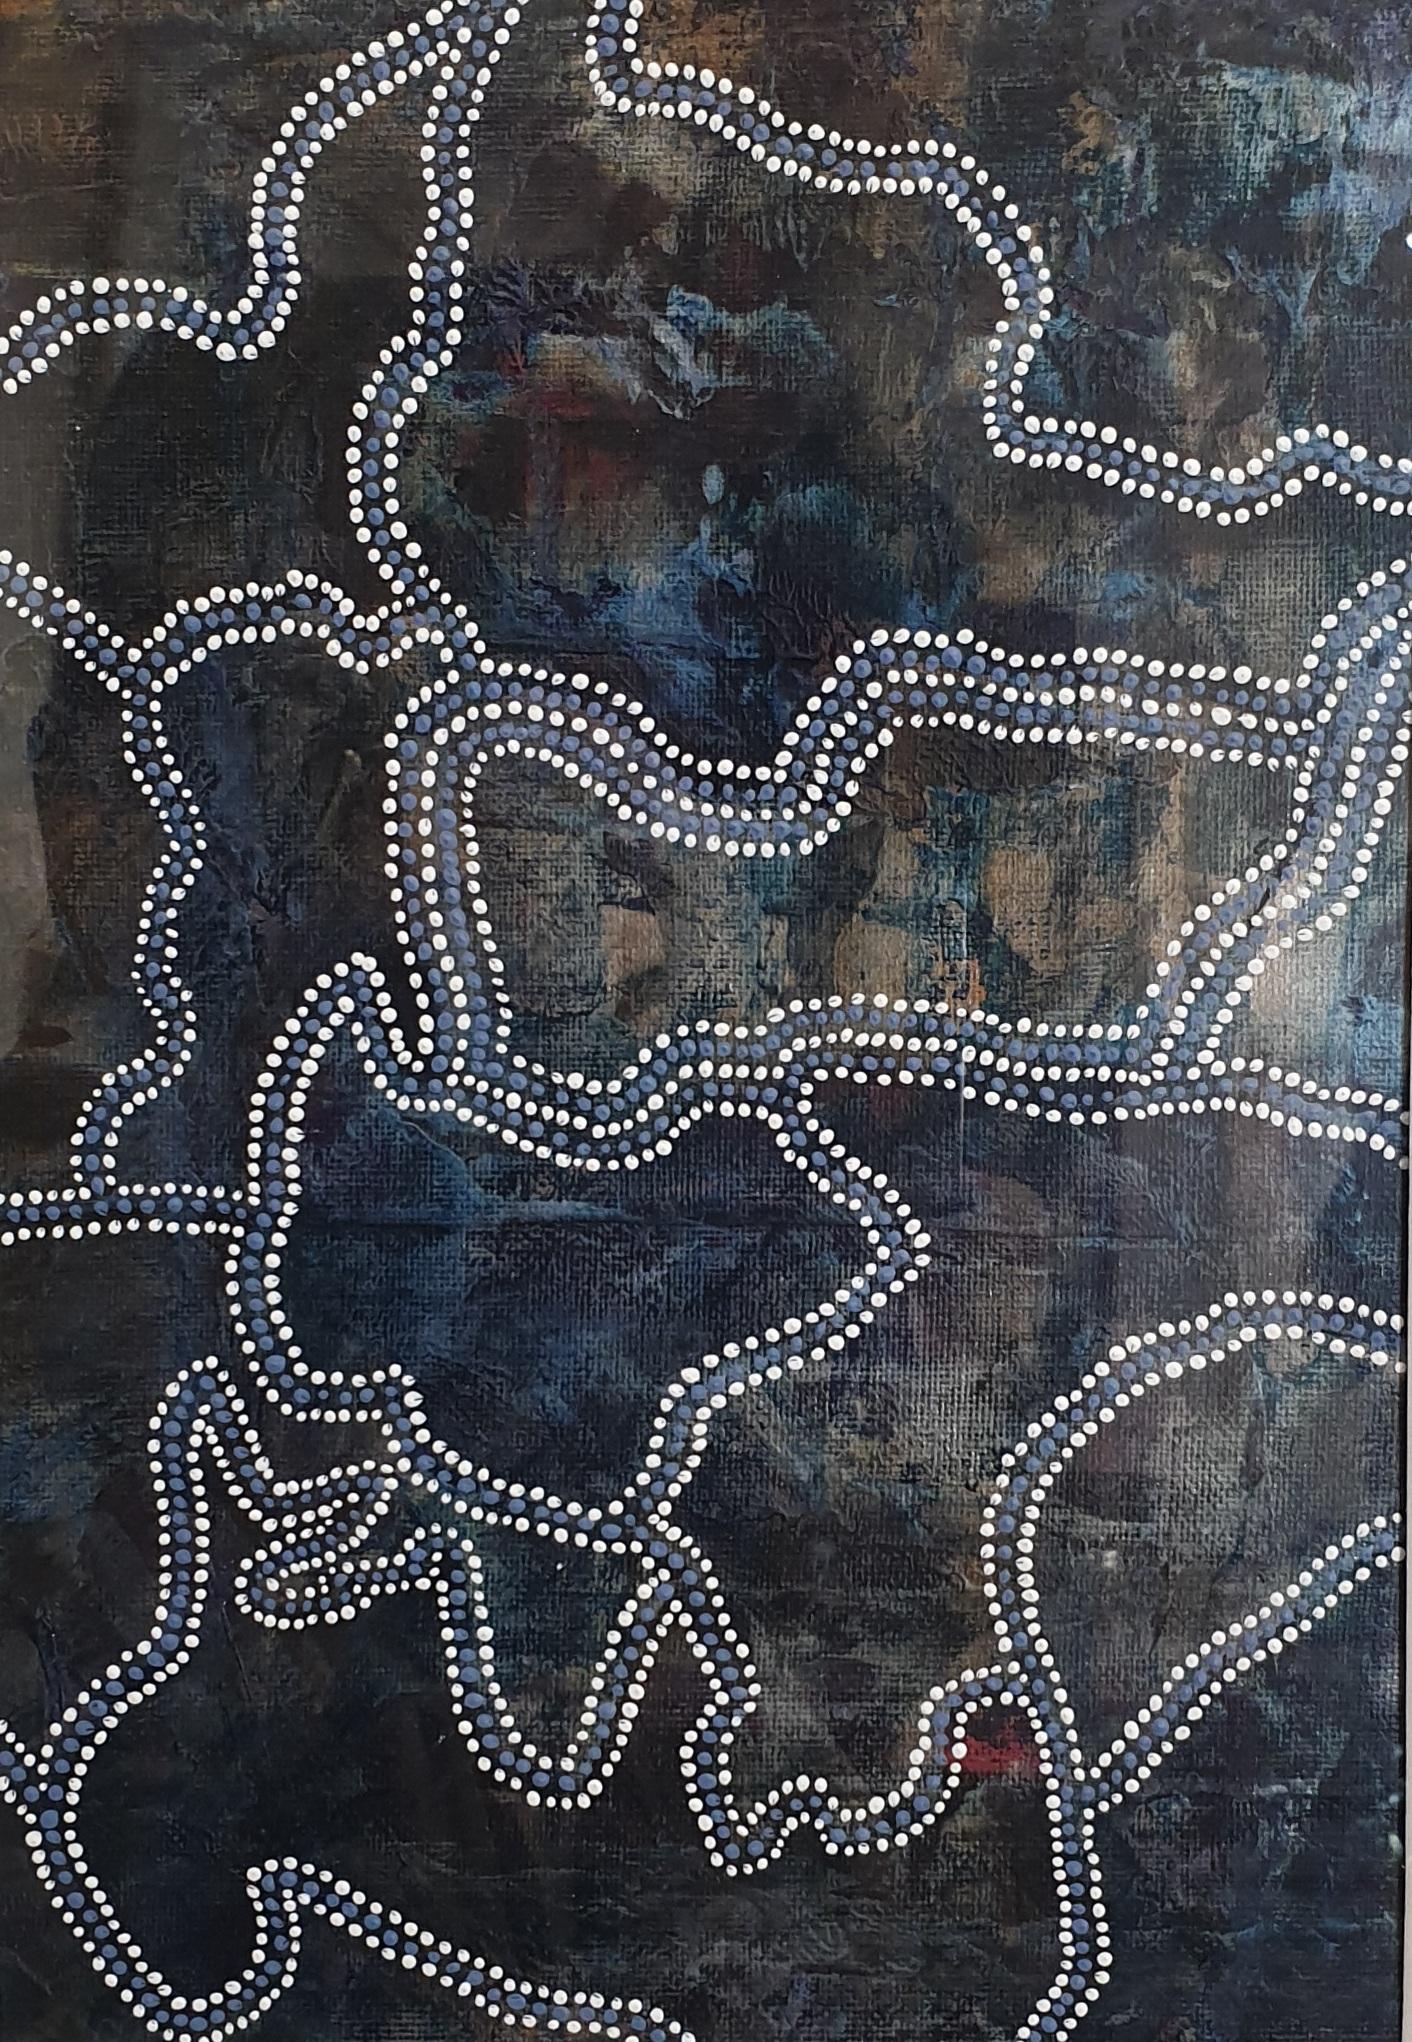 Abstract Painting Menno Modderman  - Abstrait contemporain d'inspiration aborigène. 